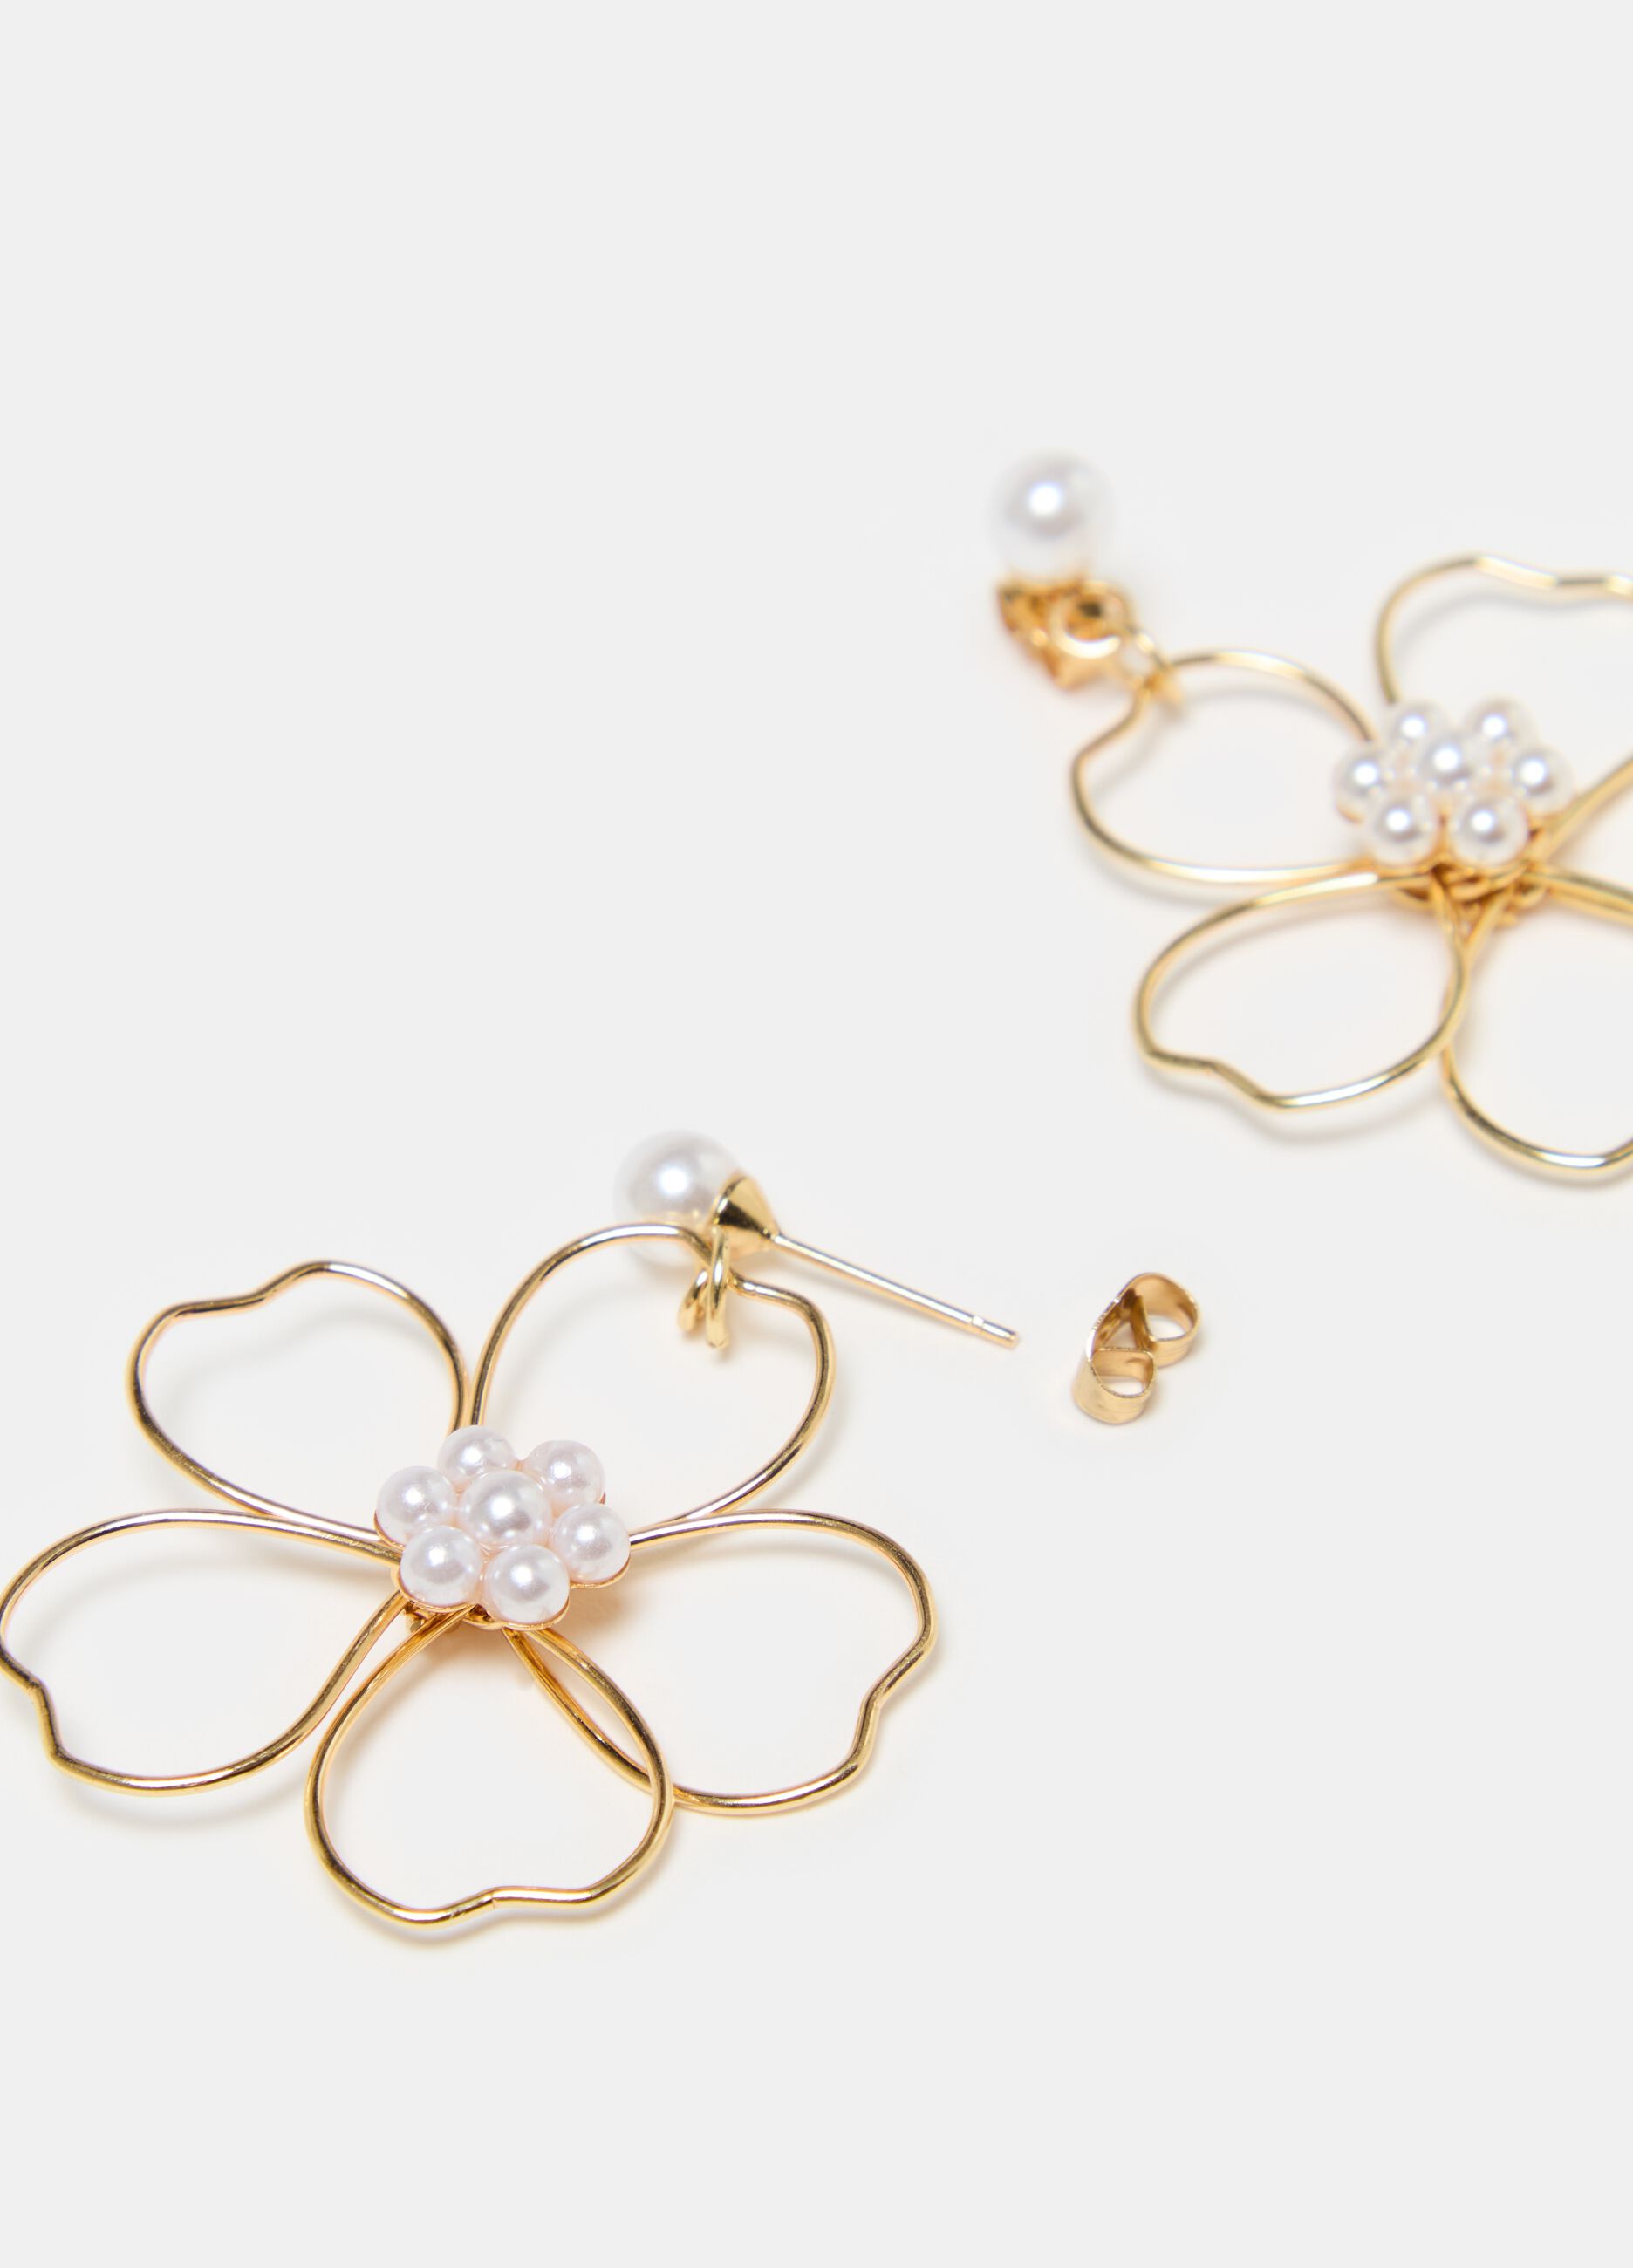 Flower earrings with pearls